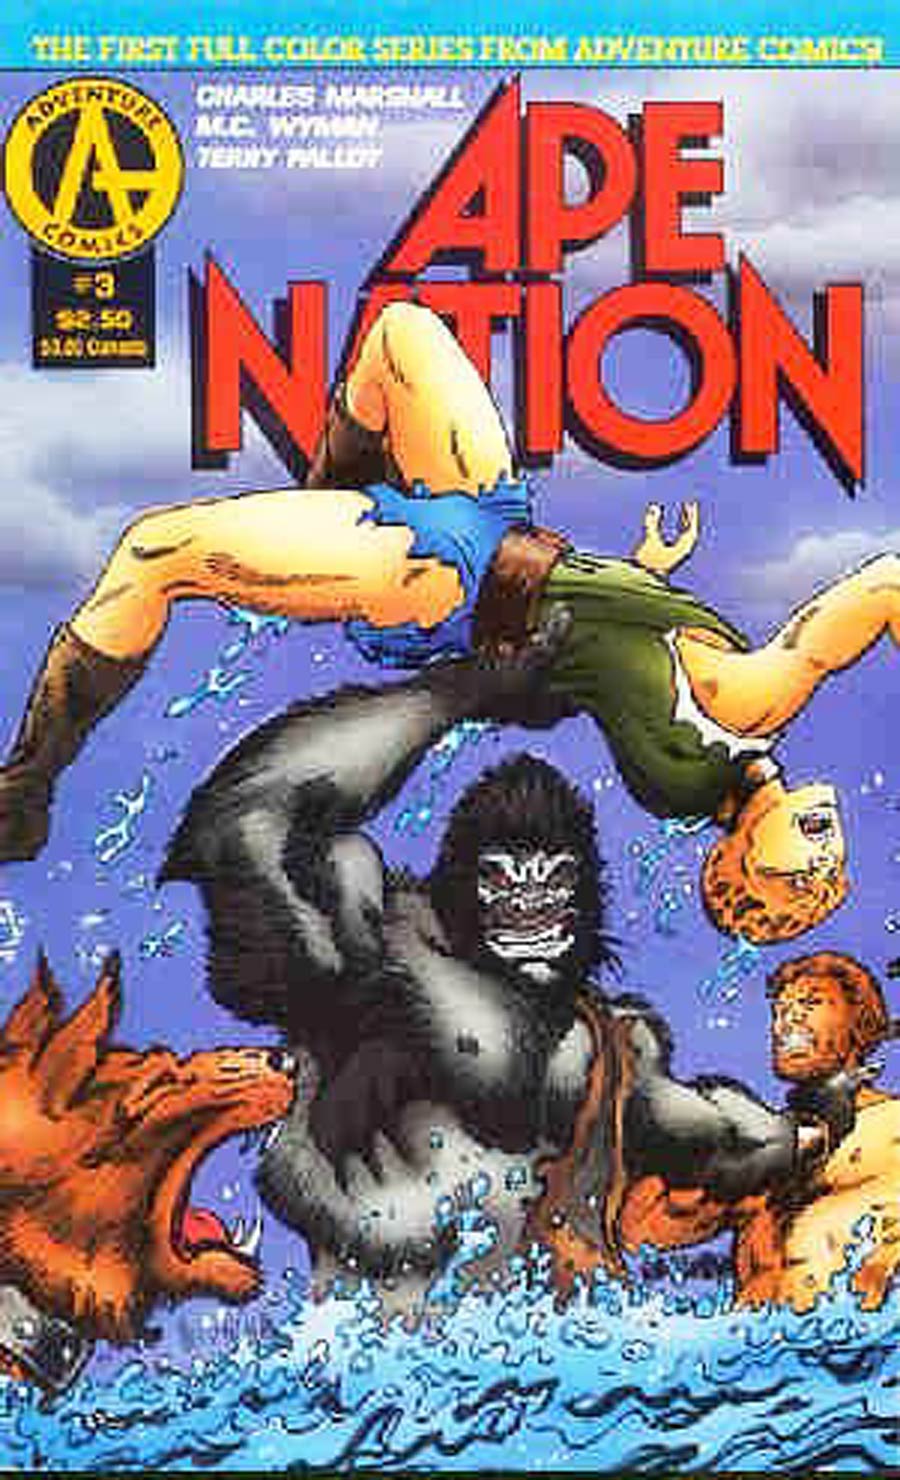 Ape Nation #3